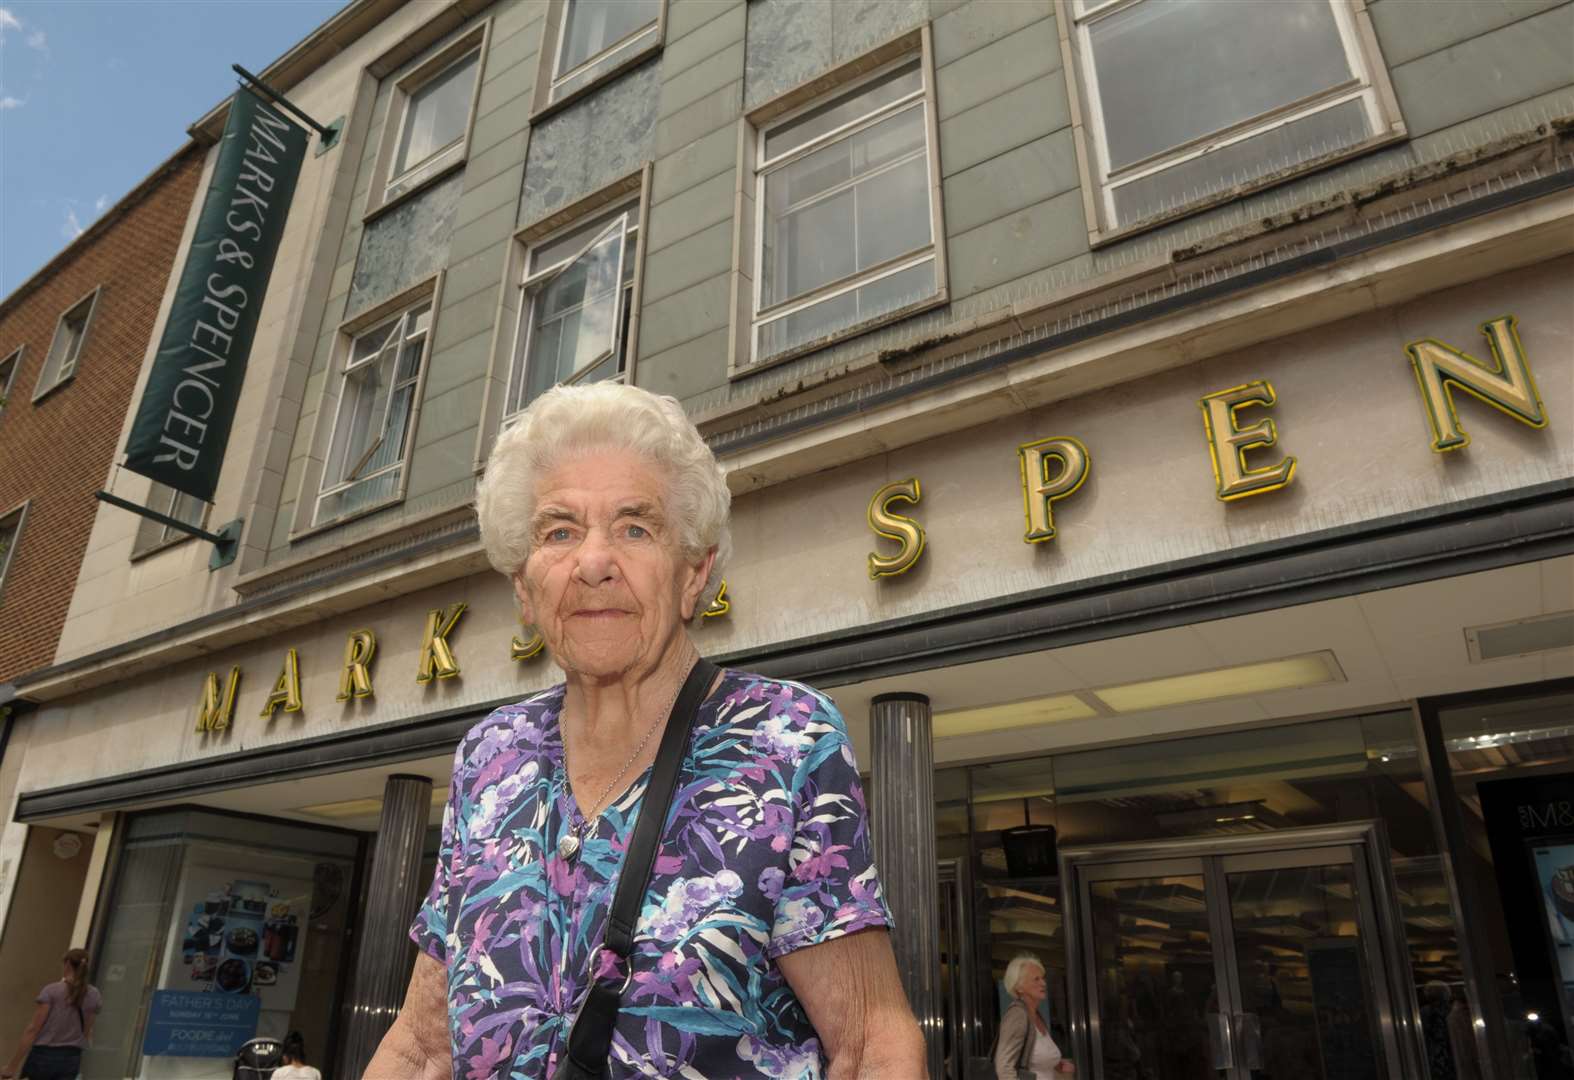 M&S campaigner dies aged 100